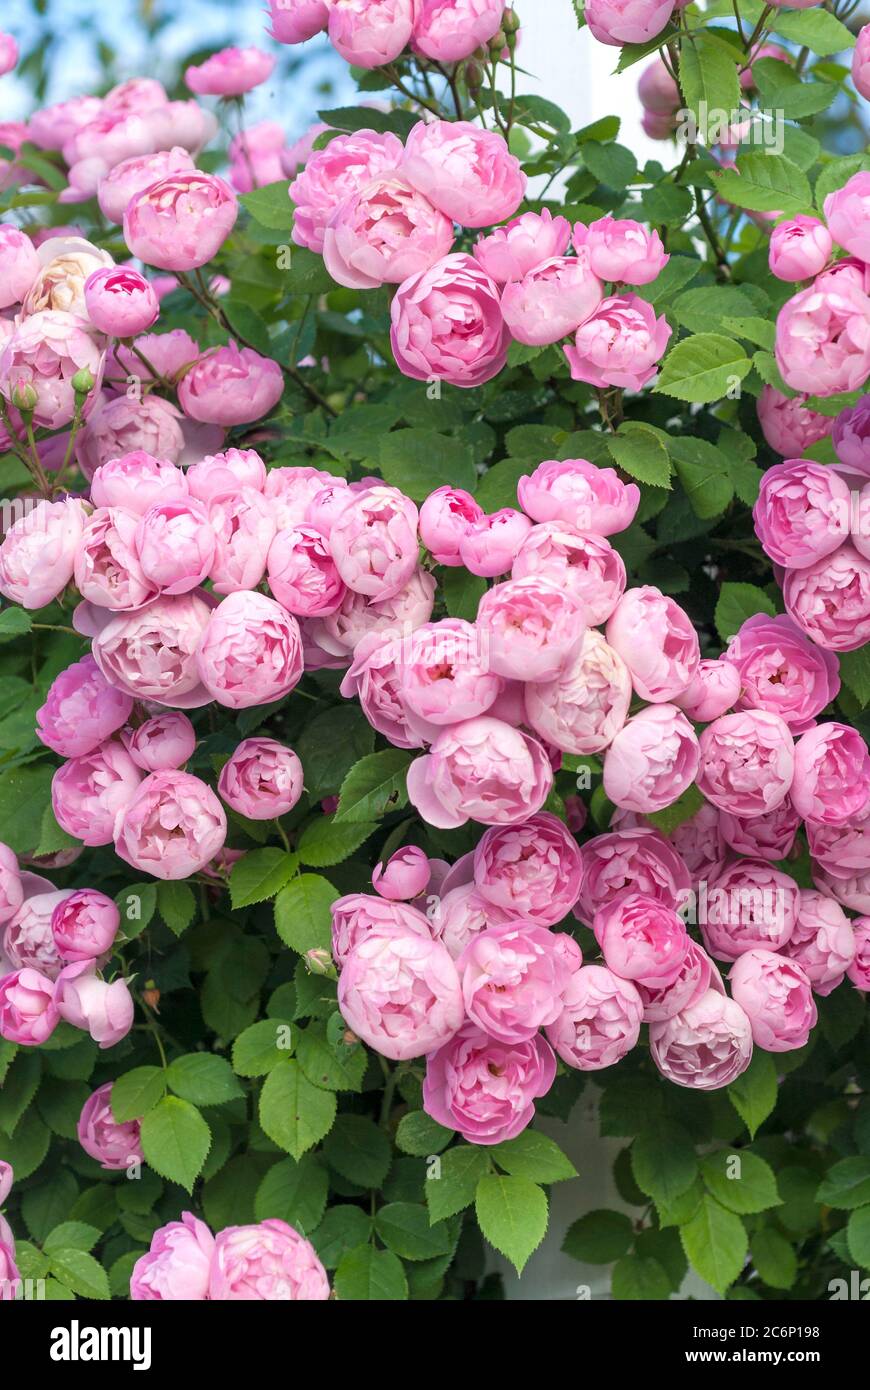 Rambler-Rose Rosa Raubritter, Rambler Rose Pink Raubritter Stock Photo